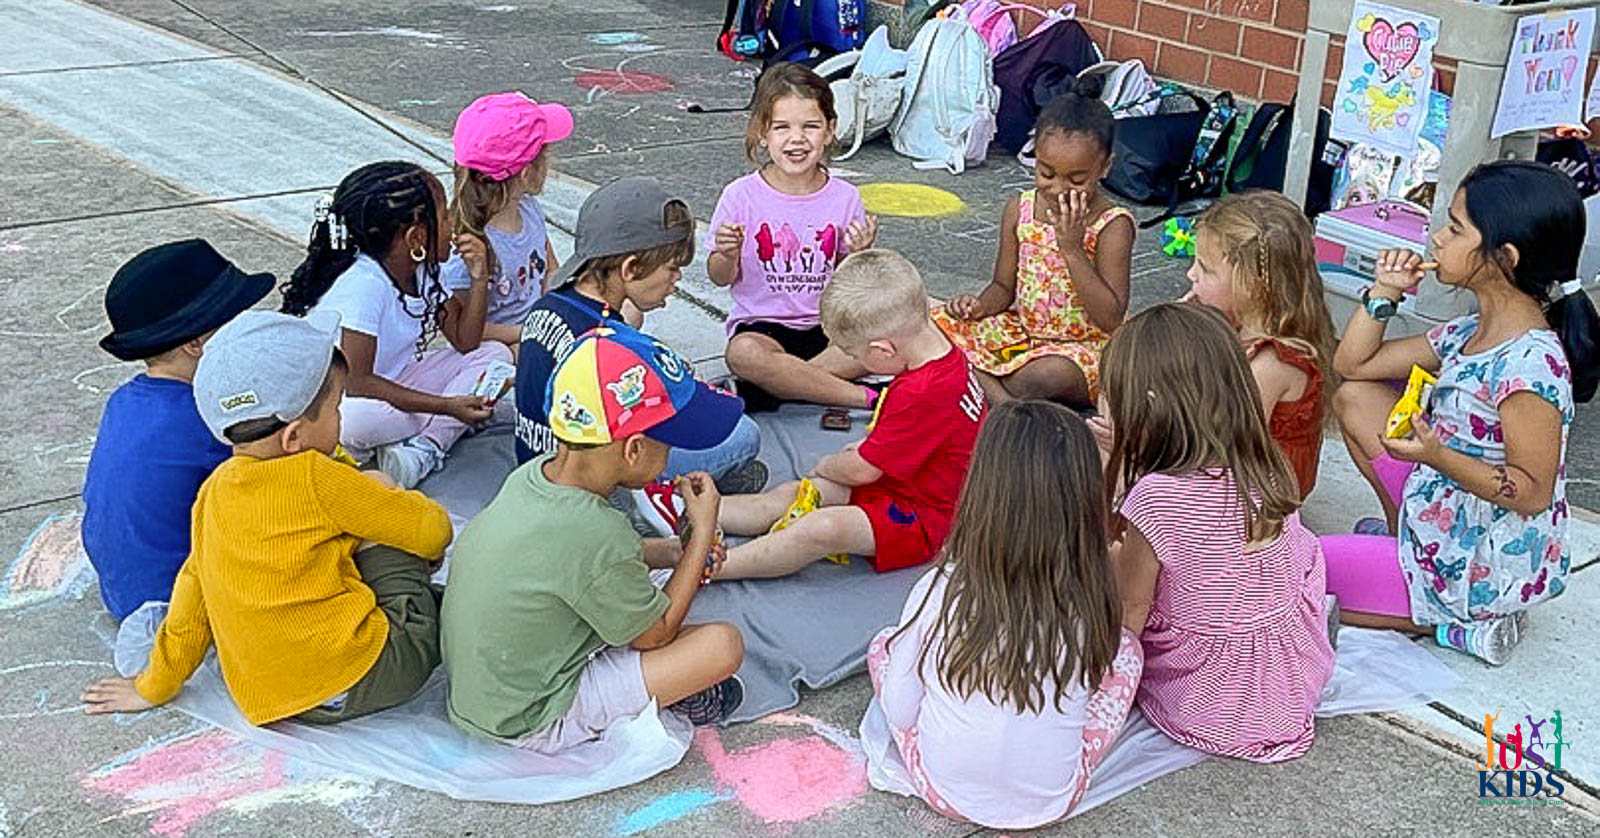 Children enjoying their time at the Just Kids Program.